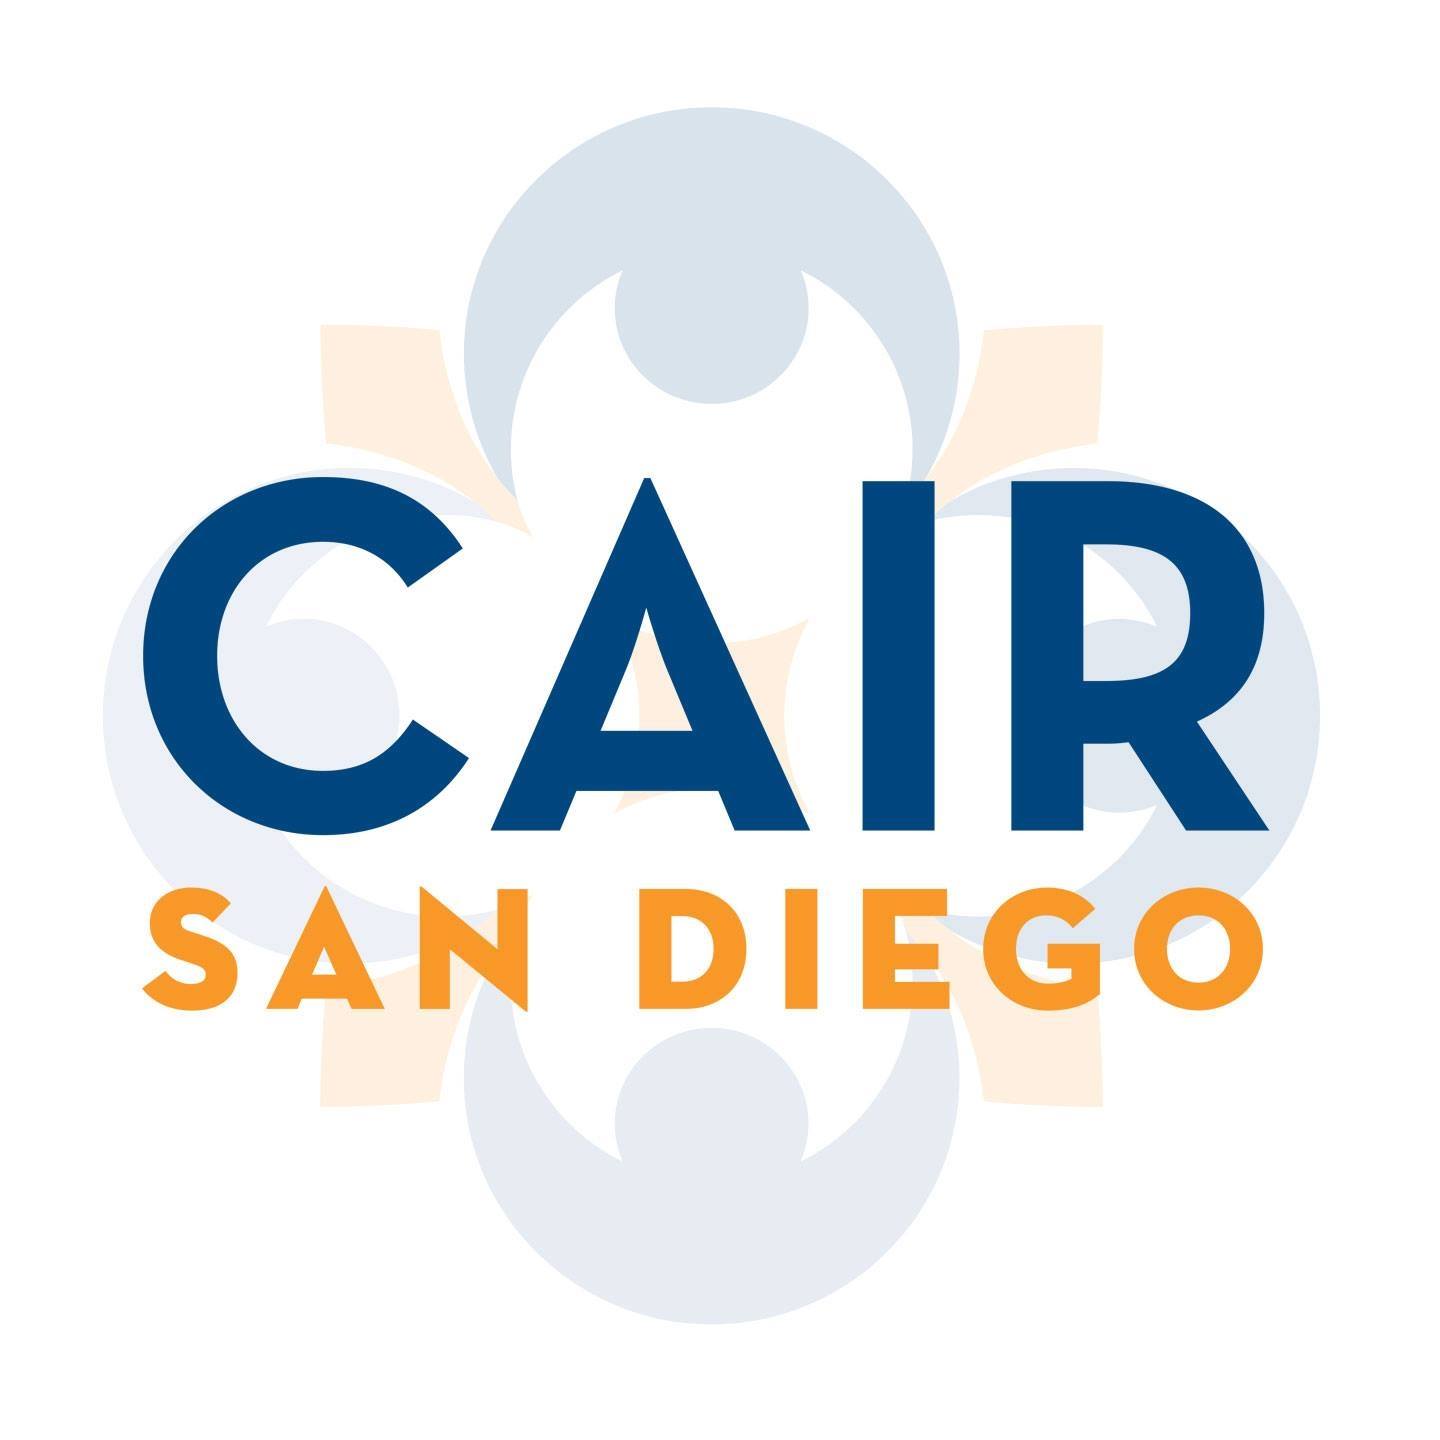 Muslim Organizations in California - Council on American-Islamic Relations California San Diego